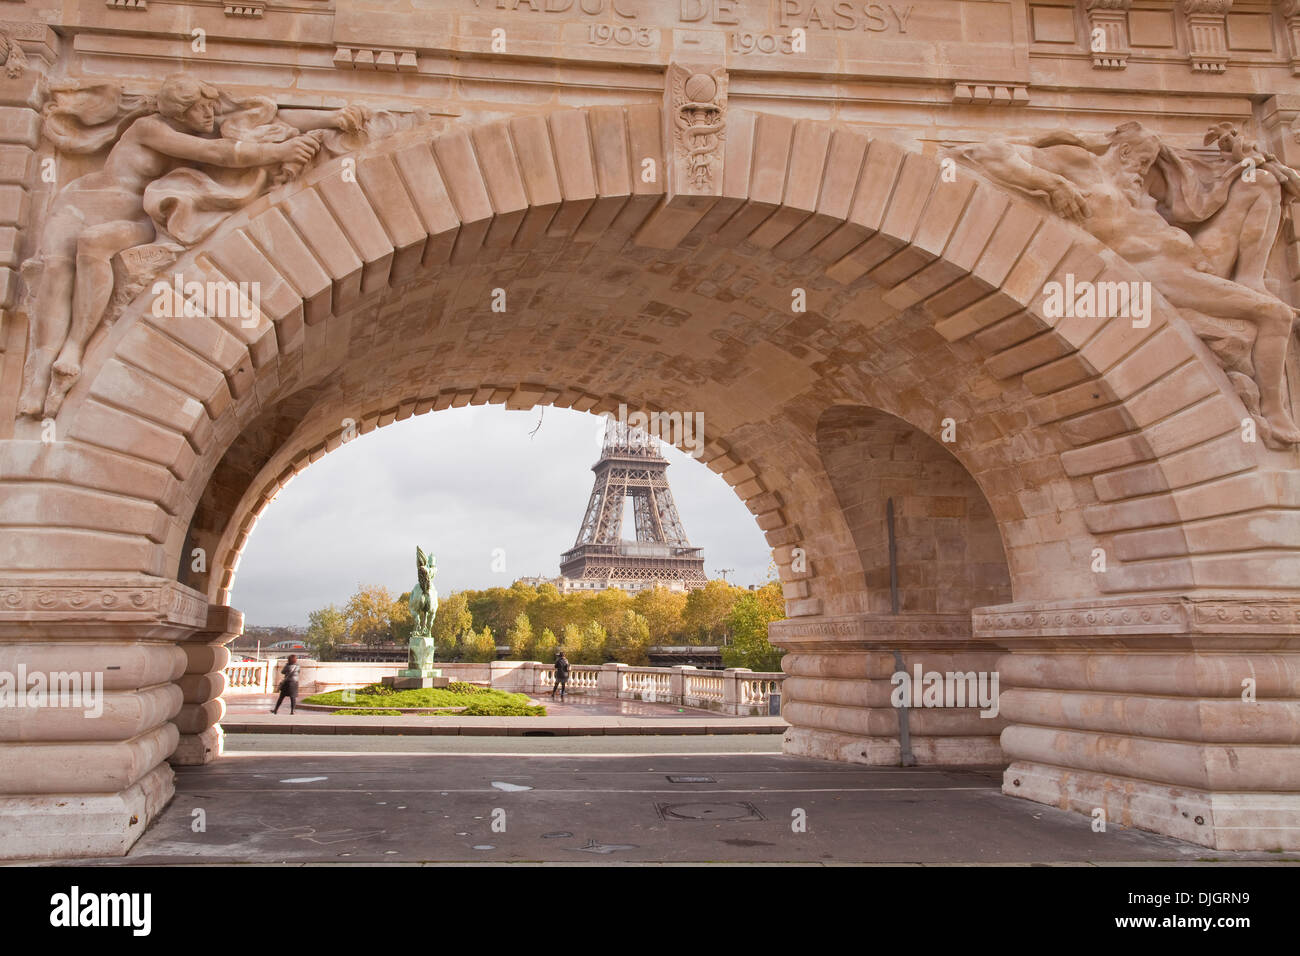 Looking through the Viaduct de Passy on Pont Bir Hakeim to the Eiffel Tower. Stock Photo